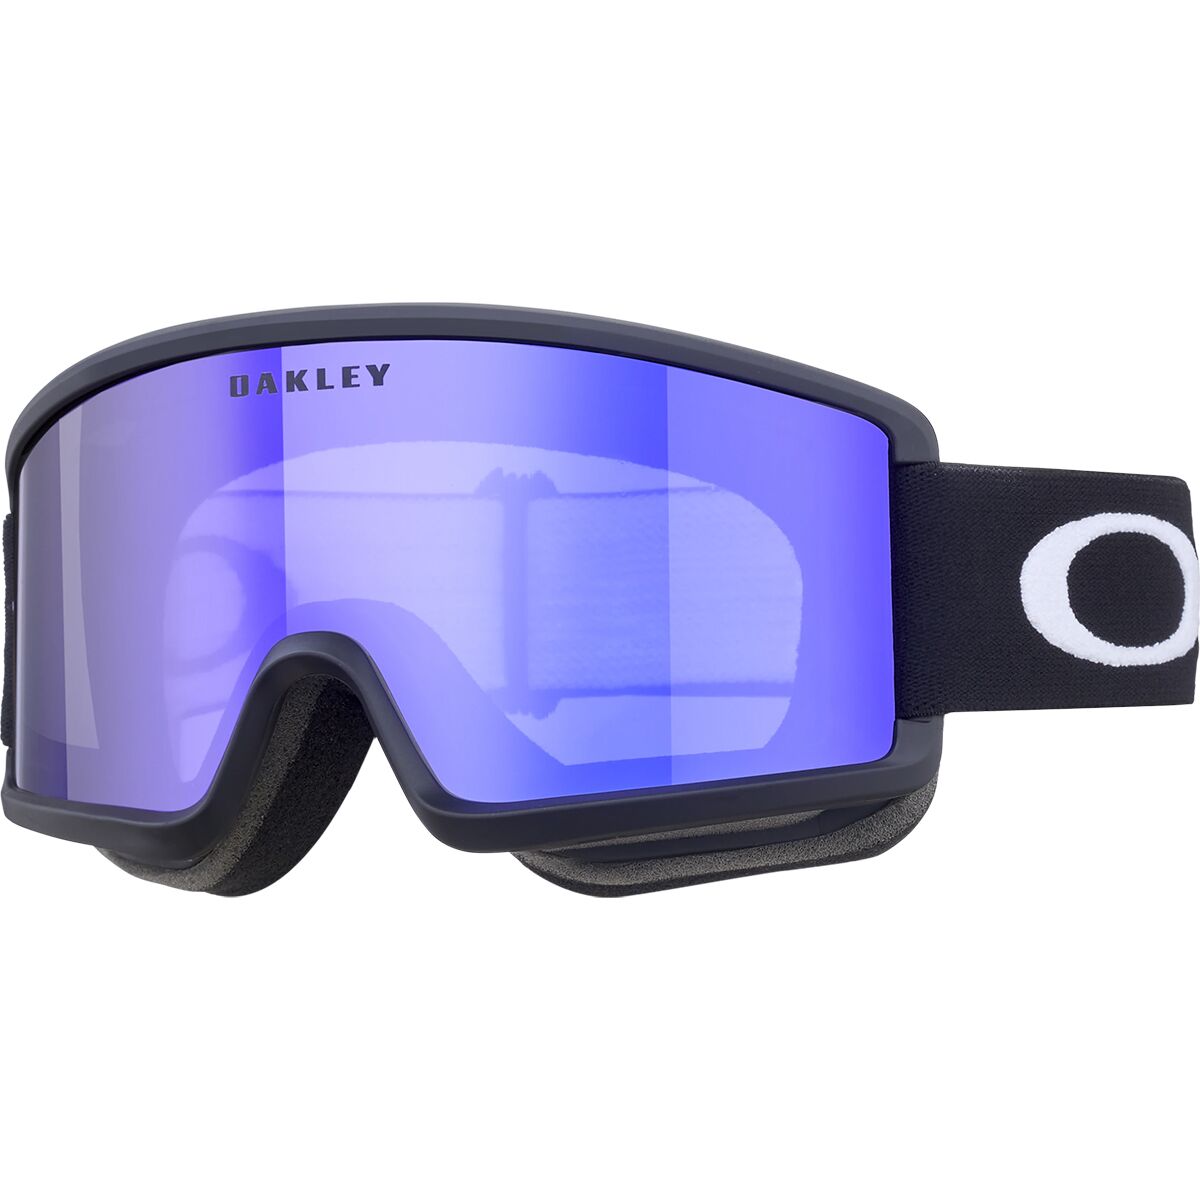 Photos - Ski Goggles Oakley Target Line S Goggles - Kids' 